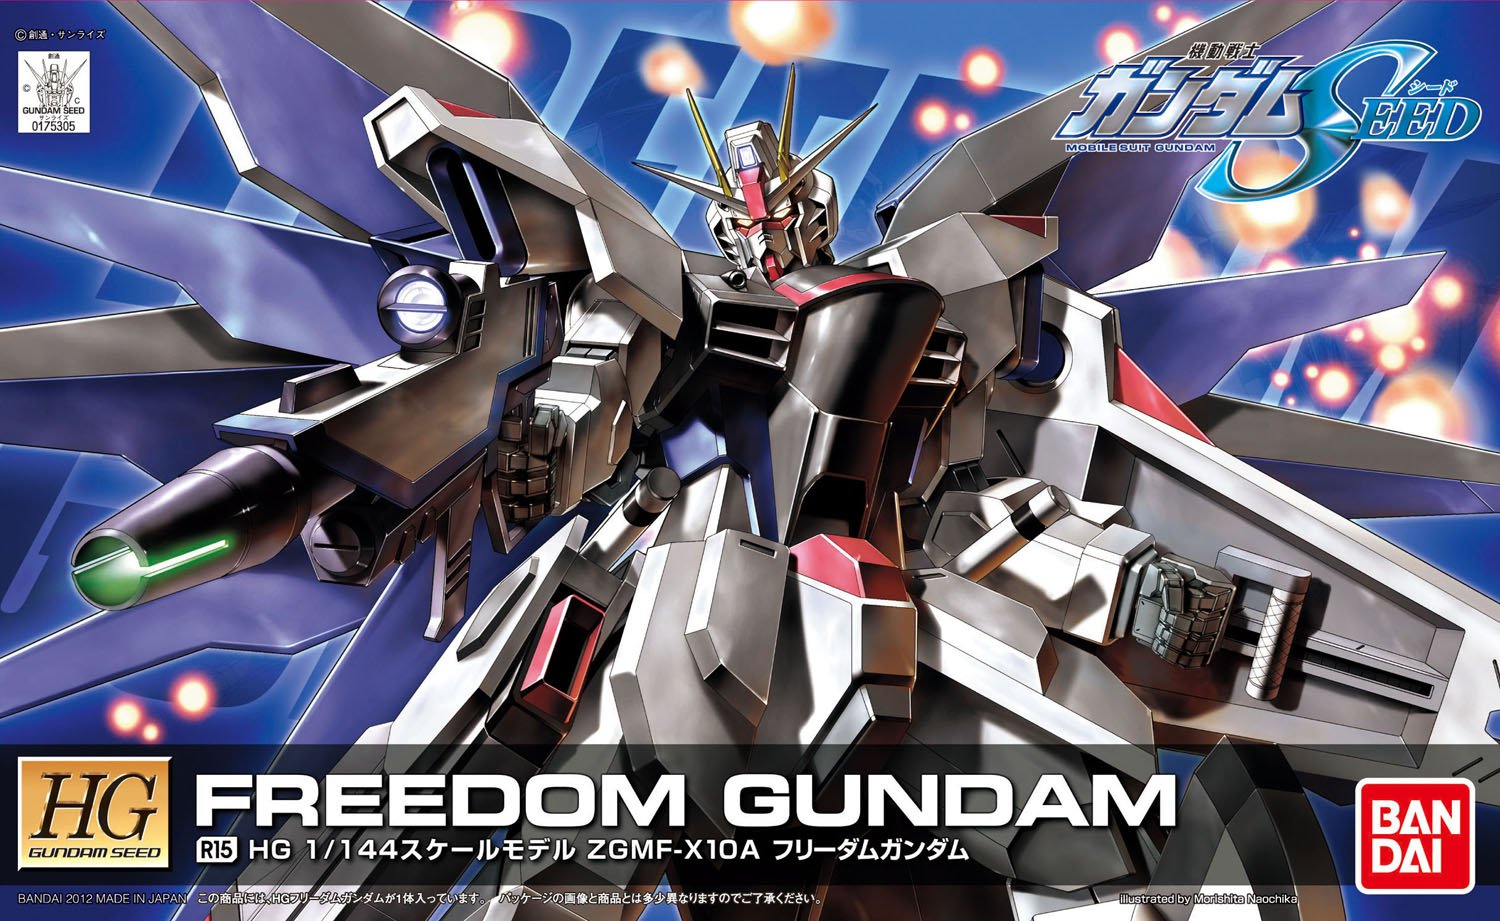 Hg 1 144 R 15 Zgmf X10a Freedom Gundam Box Art Official Images Wallpaper Size Gunjap